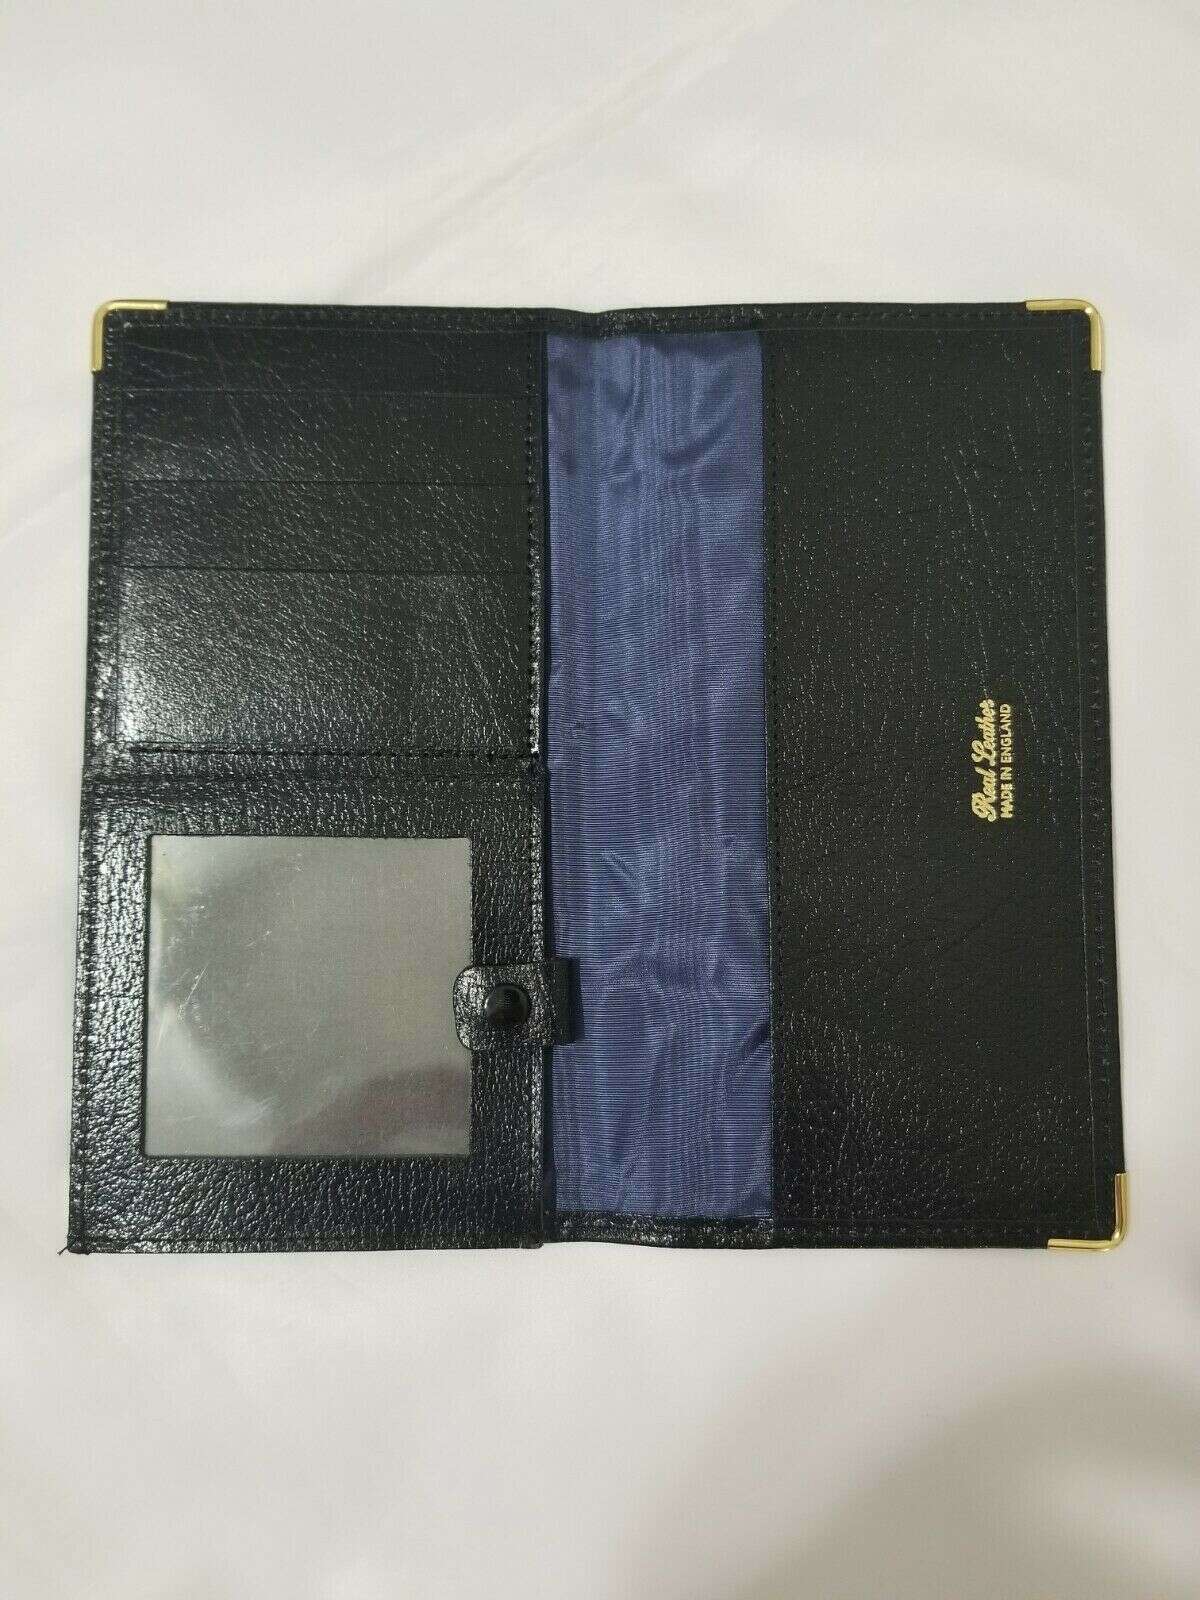 Isolation Wallet by Mark Mason shown open